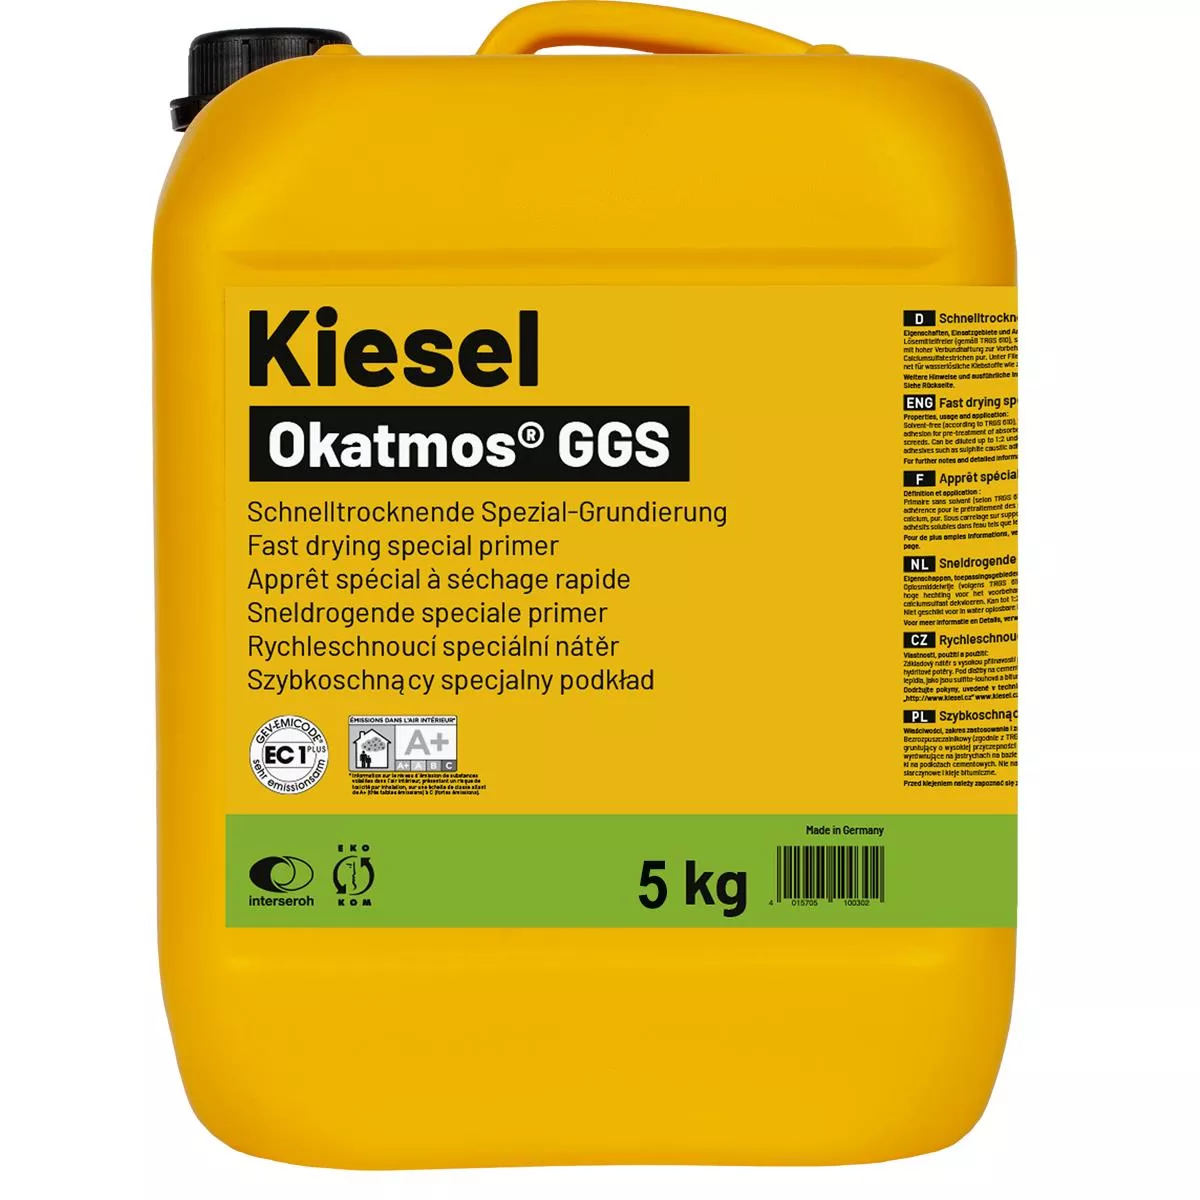 Spezial Grundierung Kiesel Okatmos GGS 5 kg